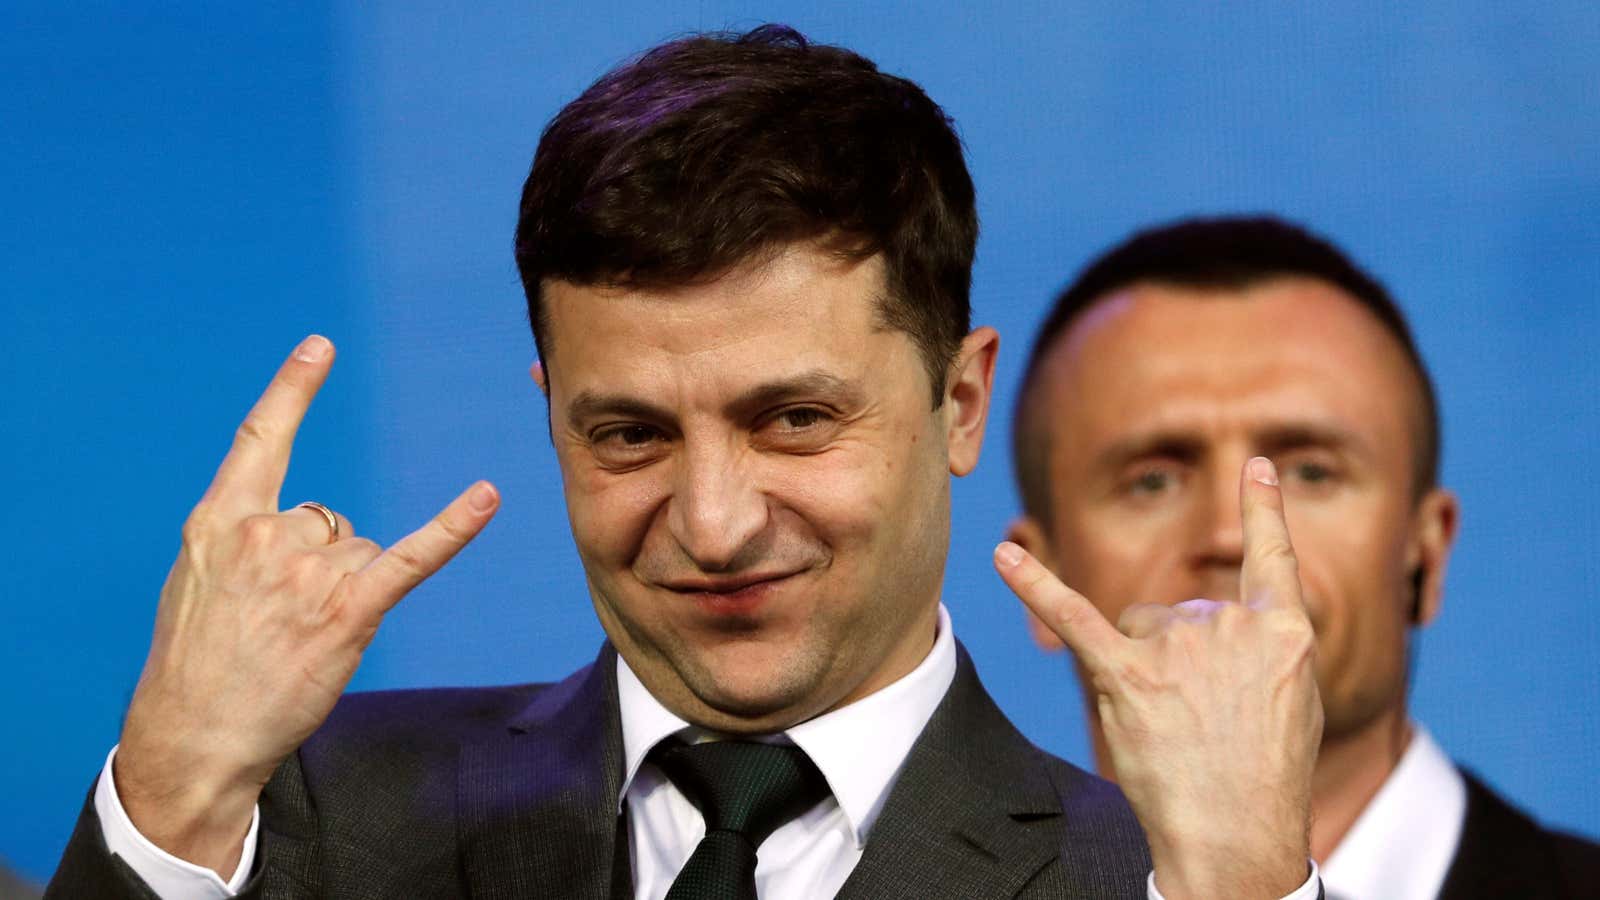 Ukraine’s stand-up president.